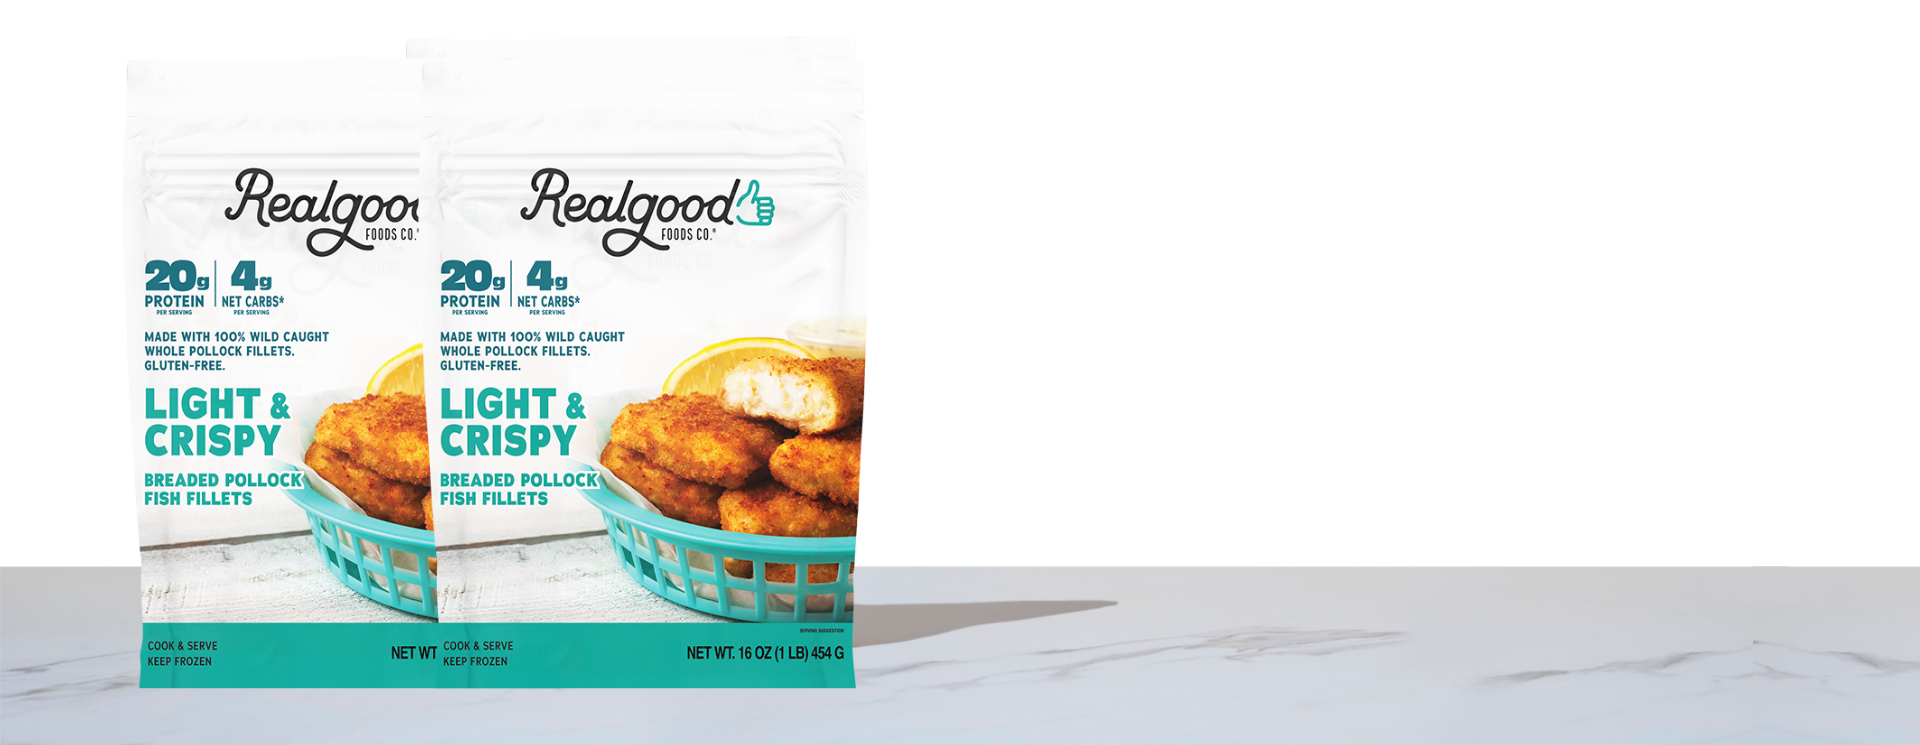 Realgood Foods Co. Stuffed Chicken, Creamy Spinach & Artichoke 2